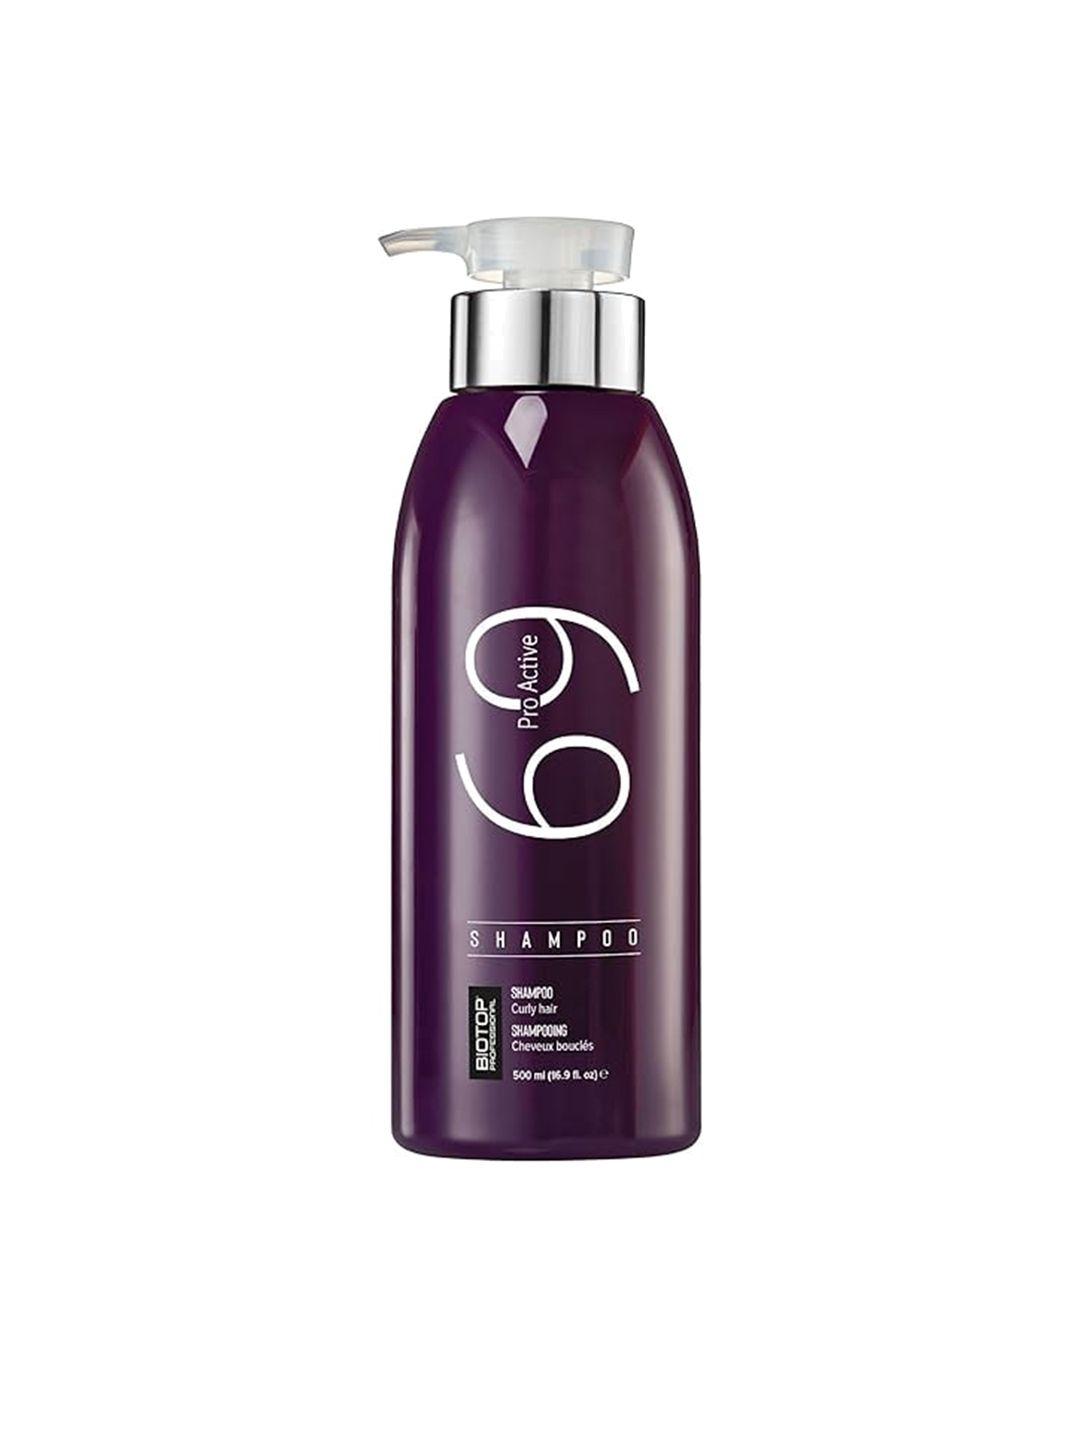 biotop professional 69 pro-active shampoo - 500ml